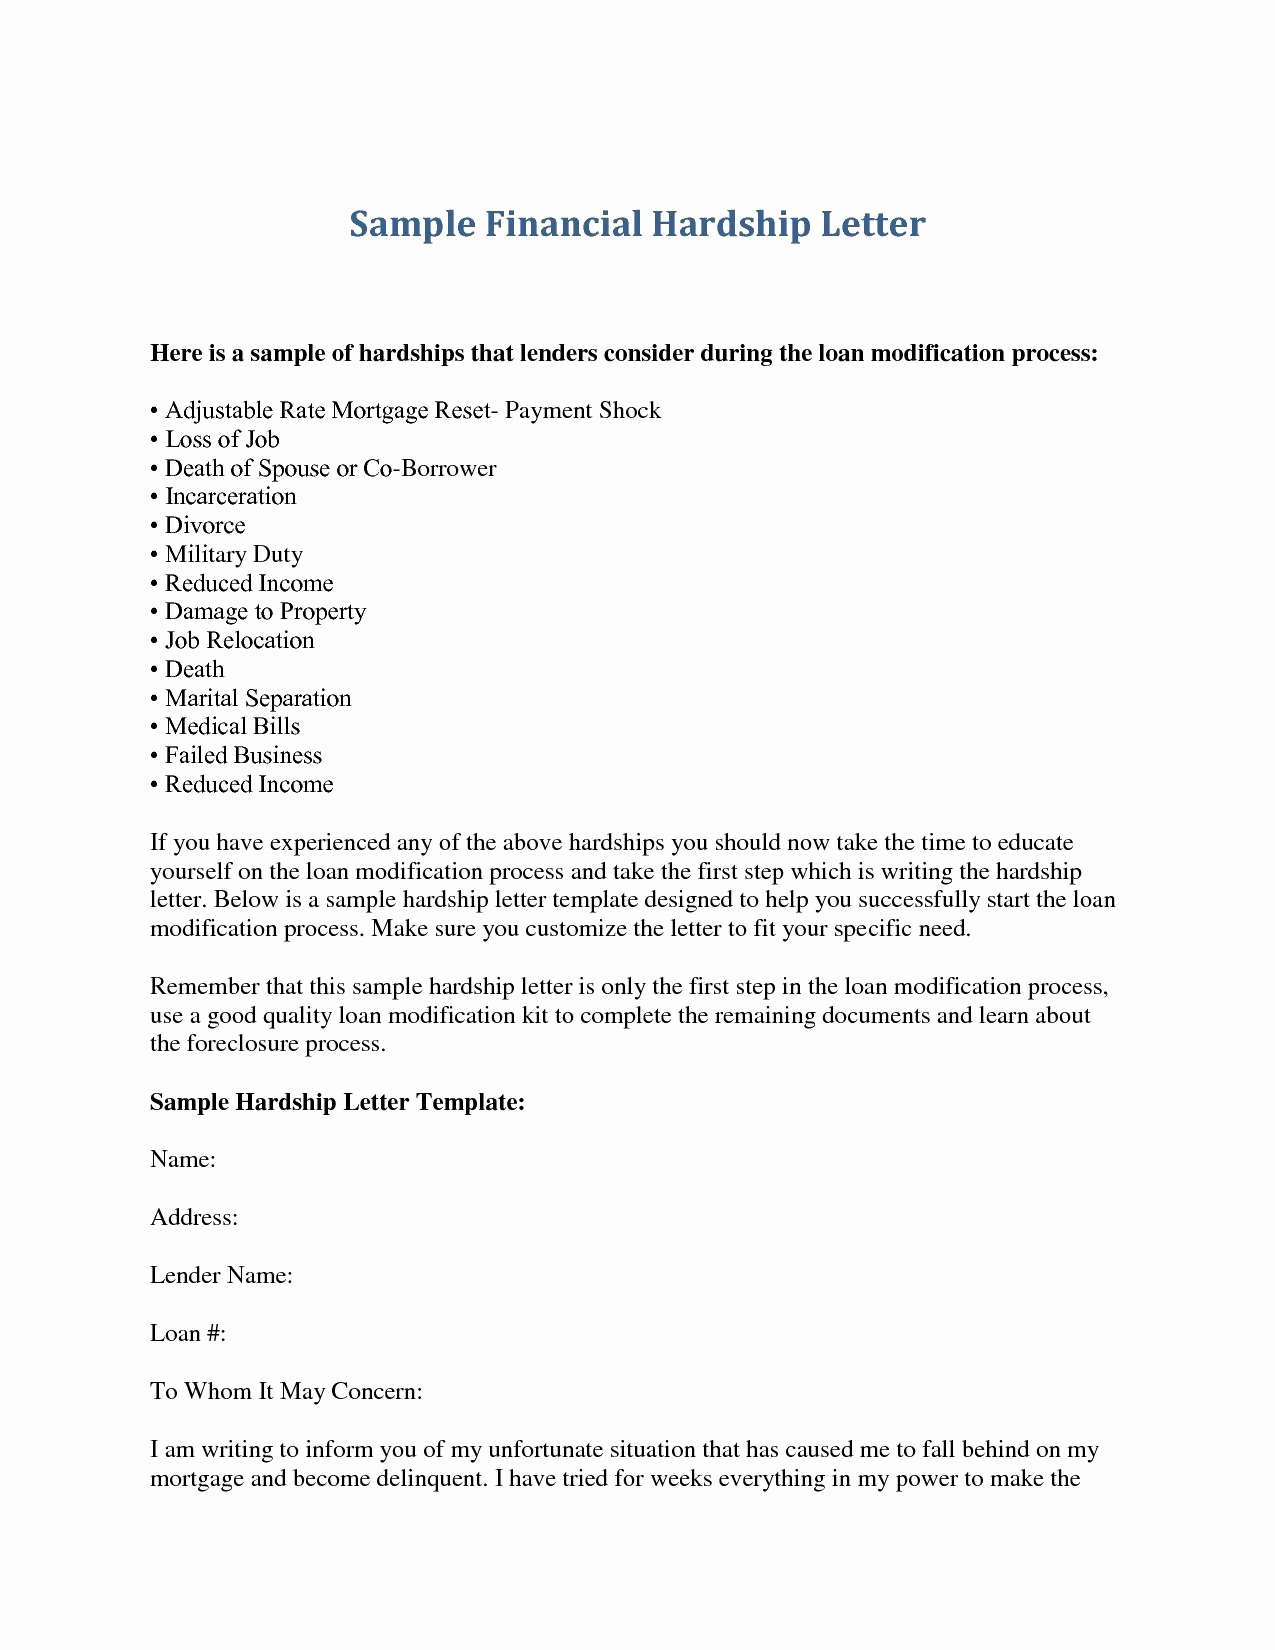 Mortgage Hardship Letter Template - Immigration Hardship Letter for A Friend New Sample Good Moral